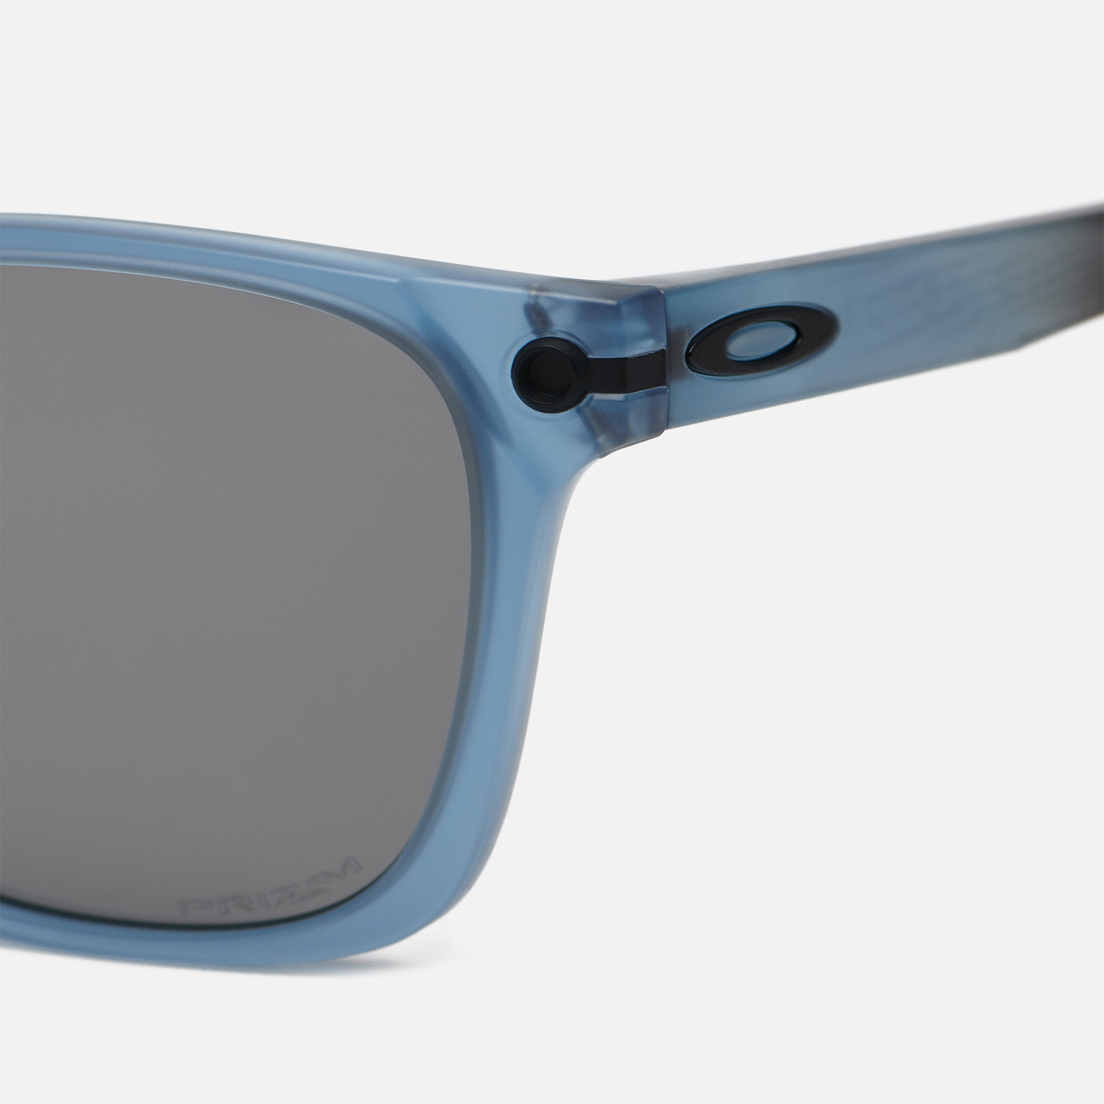 Oakley Солнцезащитные очки Ojector Community Collection